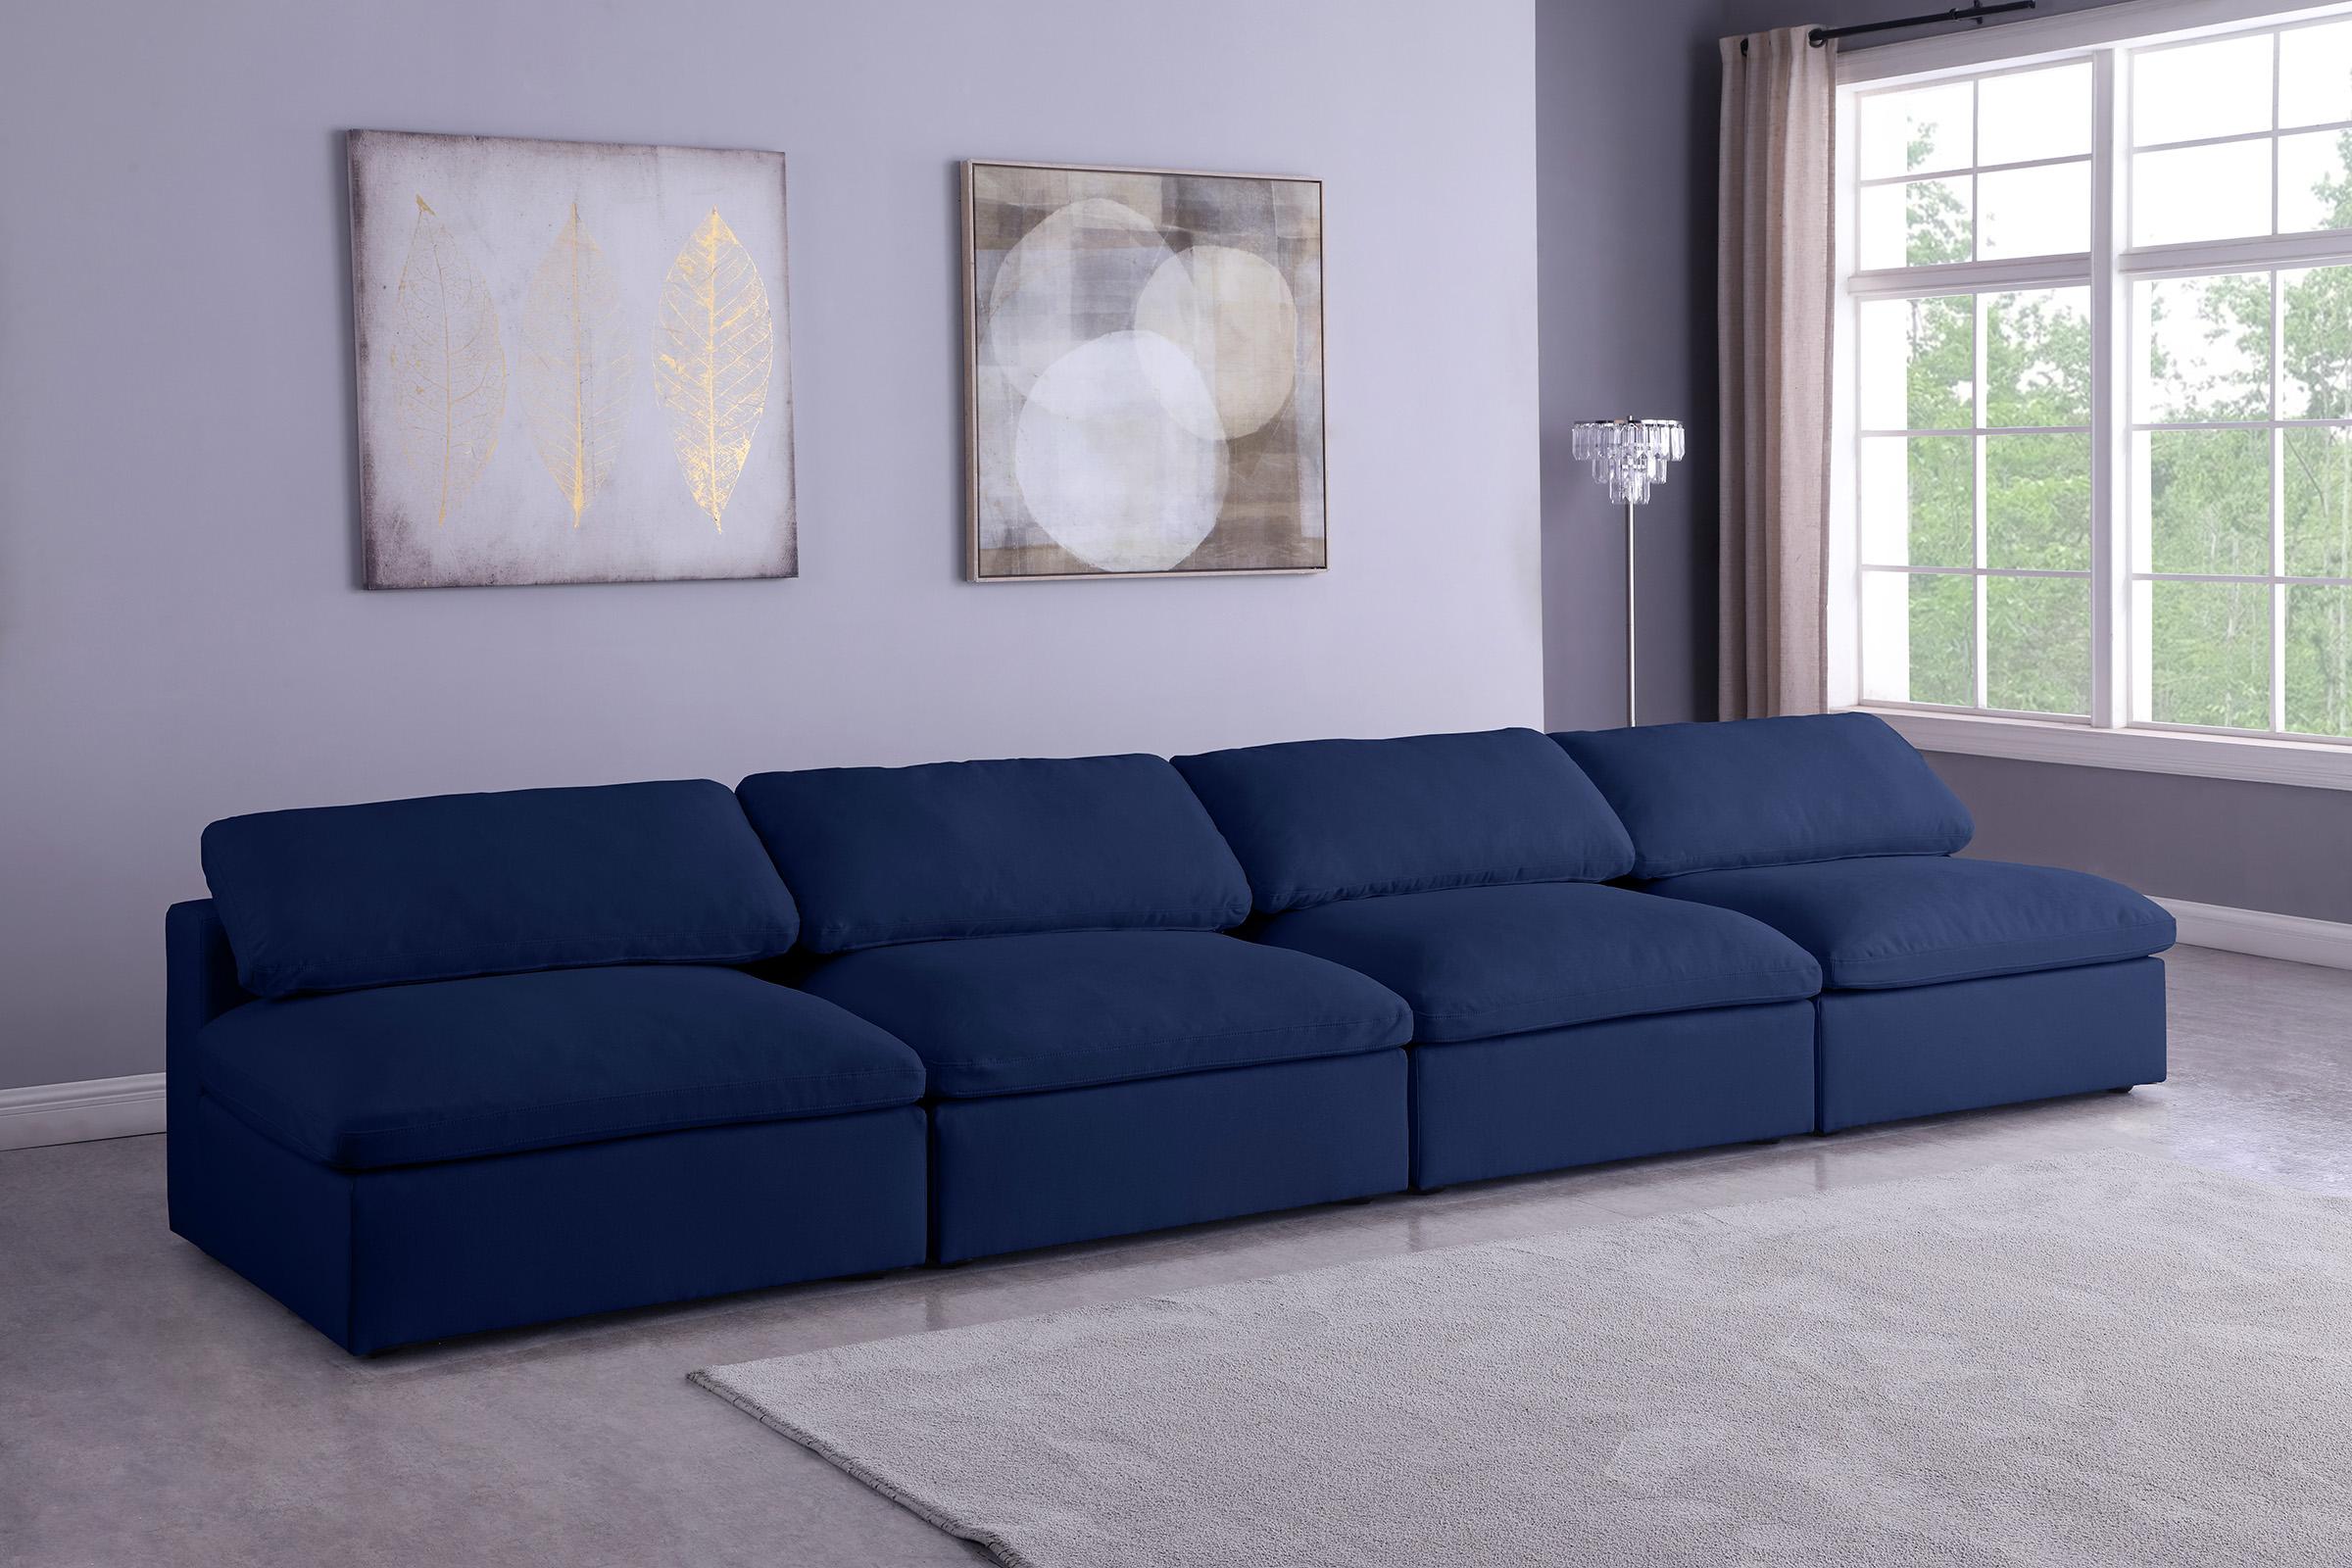 

    
Serene Navy Linen Textured Fabric Deluxe Comfort Modular Armless Sofa S156 Meridian
